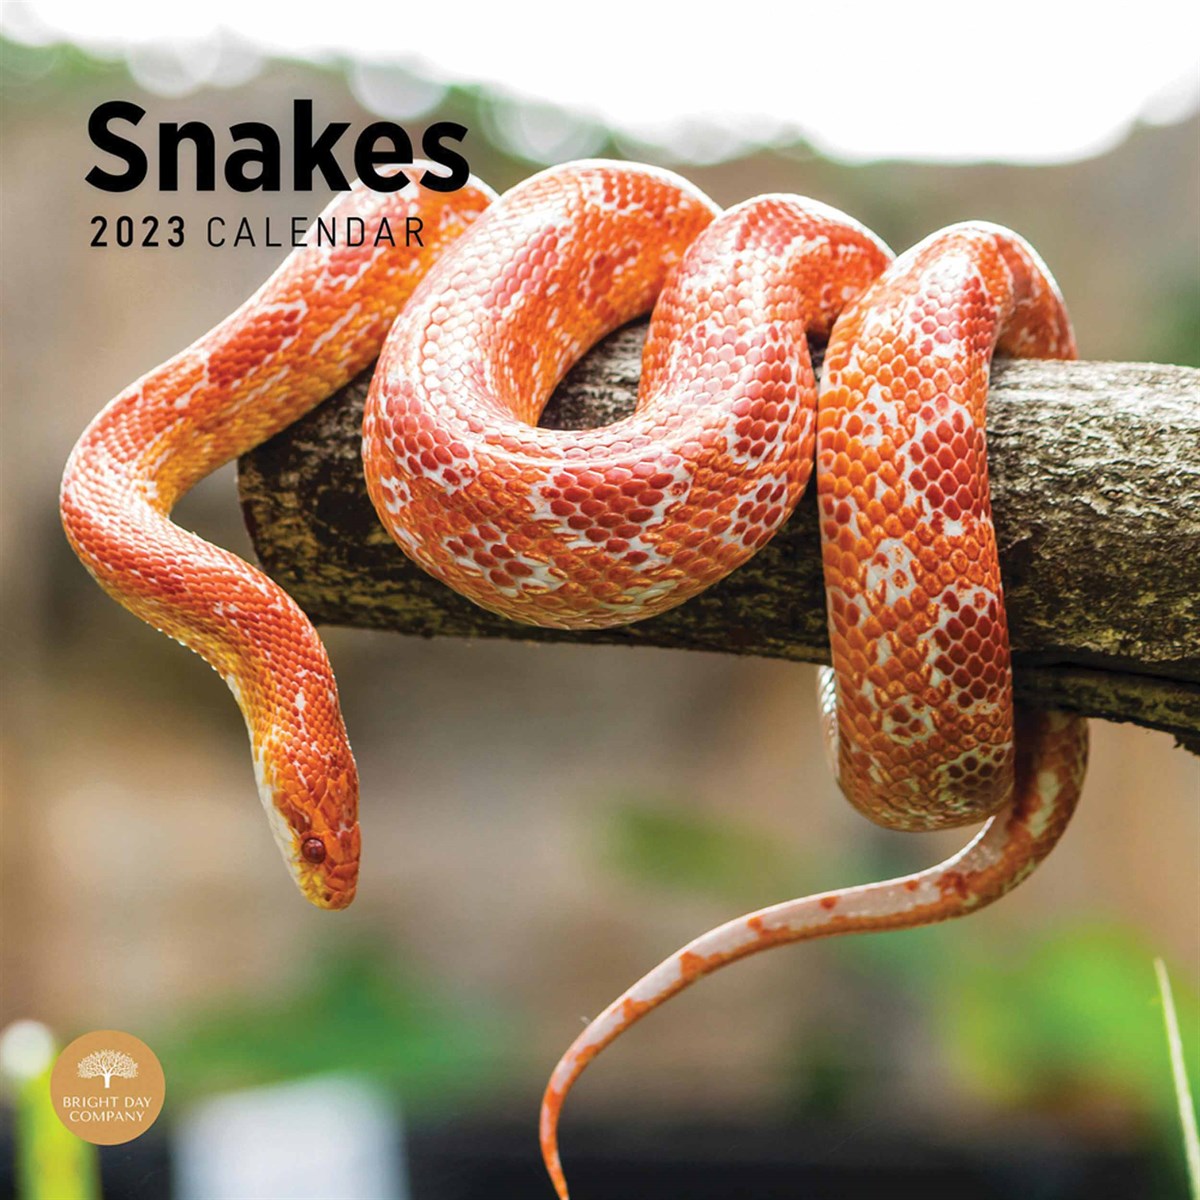 Snakes 2023 Calendars